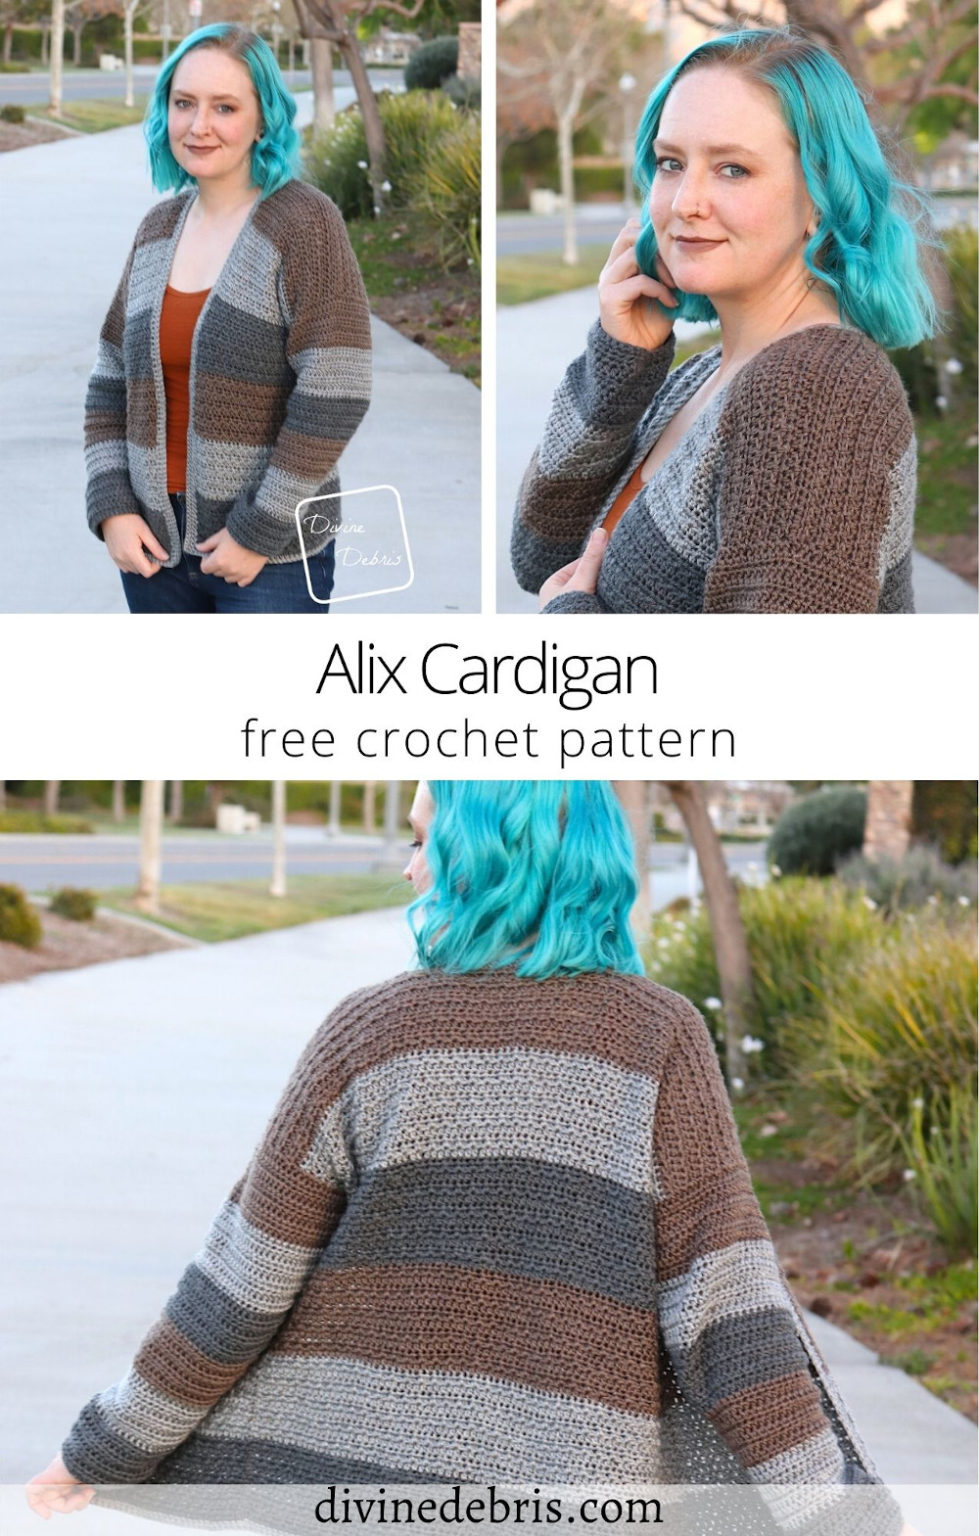 Free Alix Cardigan Crochet Pattern by DivineDebris.com